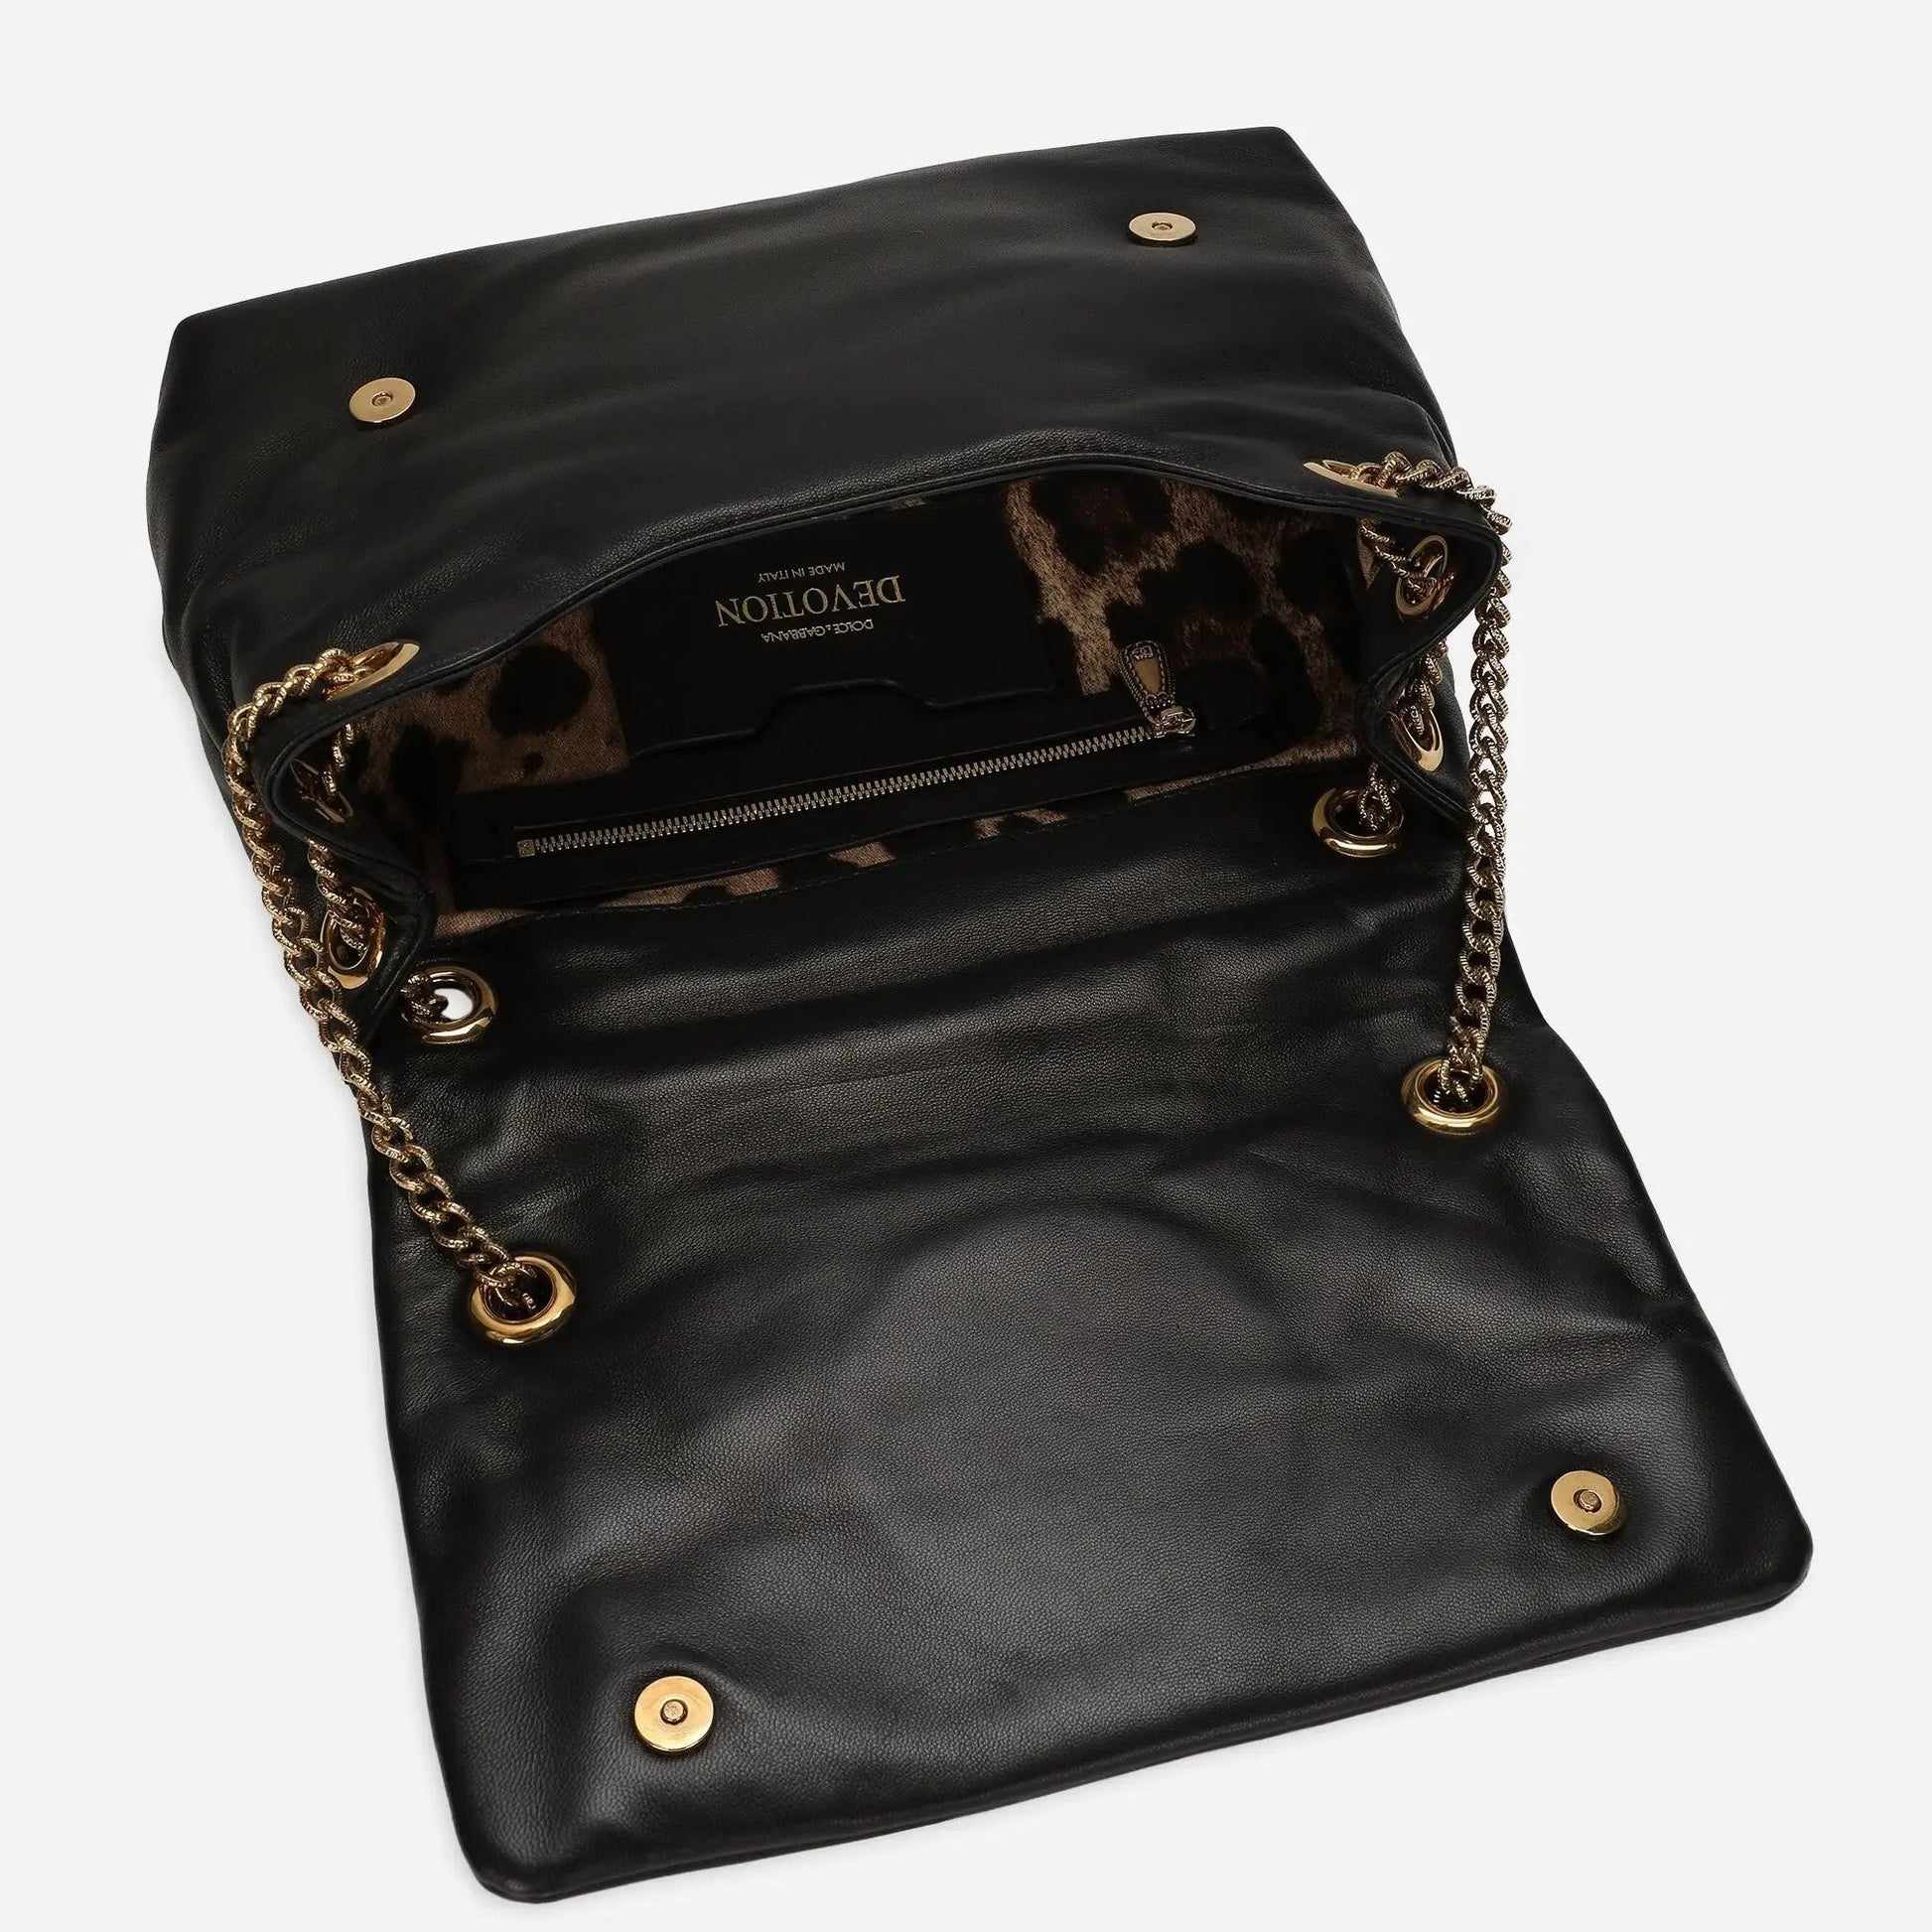 Devotion Soft Medium Shoulder Bag in Black Handbags DOLCE & GABBANA - LOLAMIR